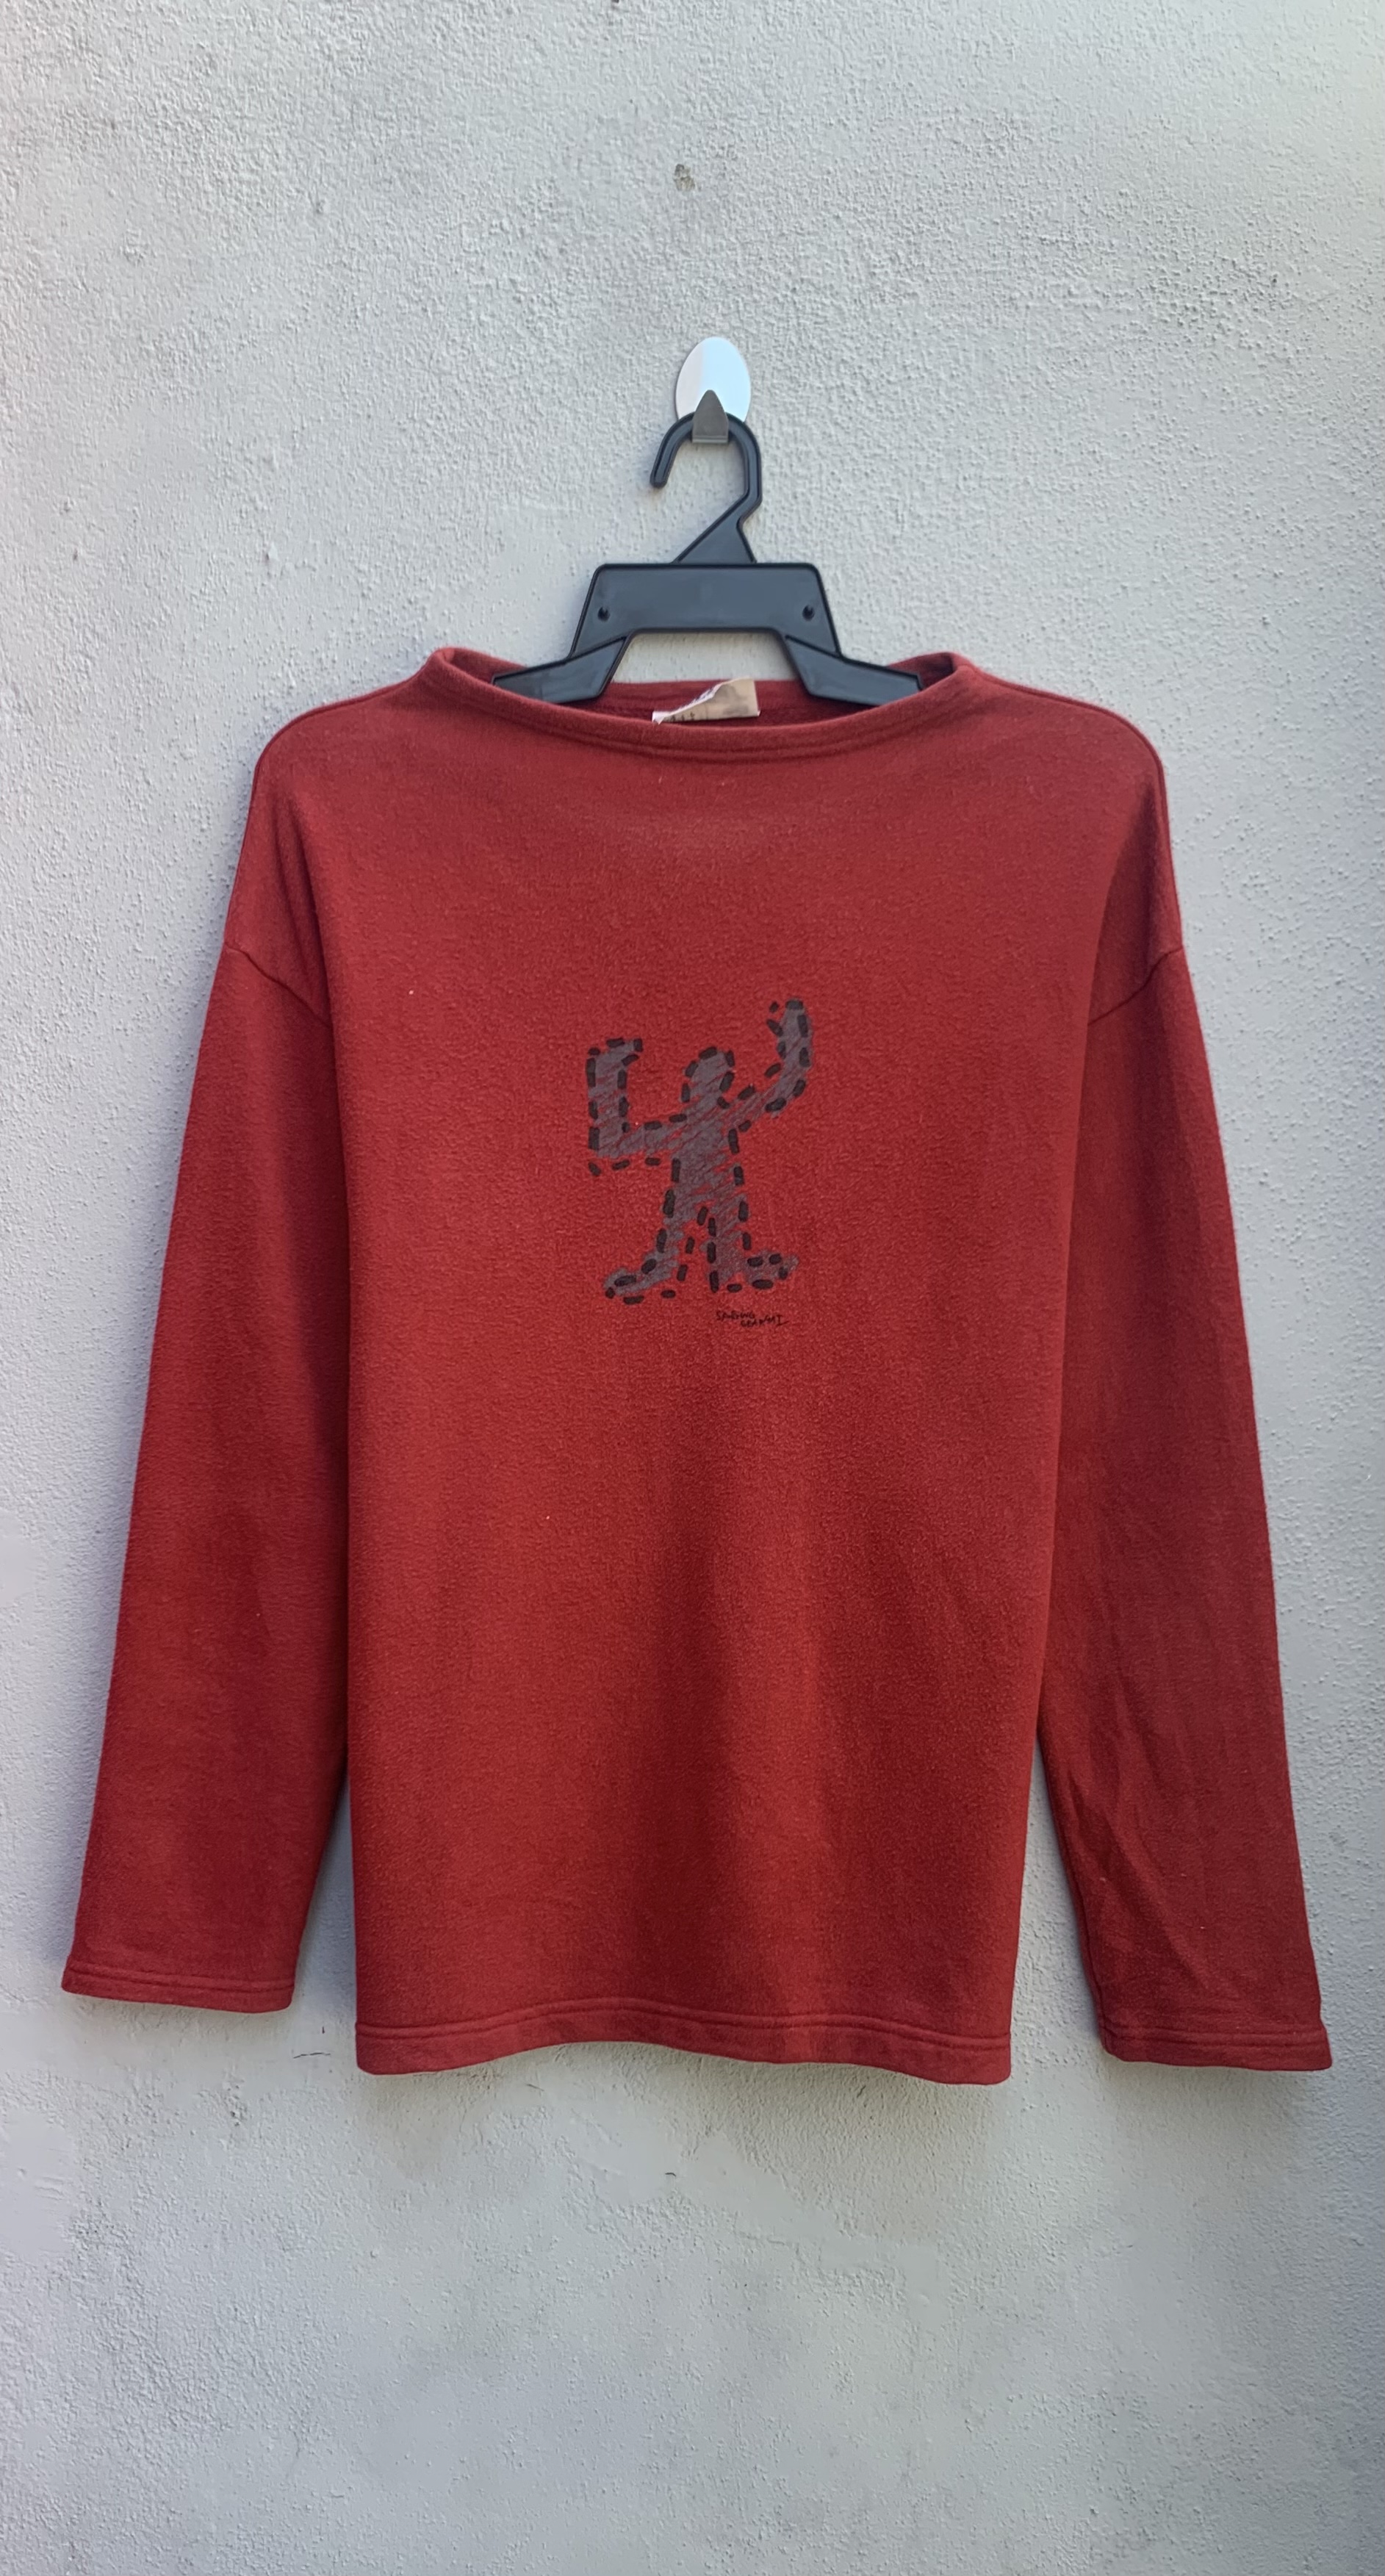 Vintage Hai Sporting Gear Sweatshirt - 1